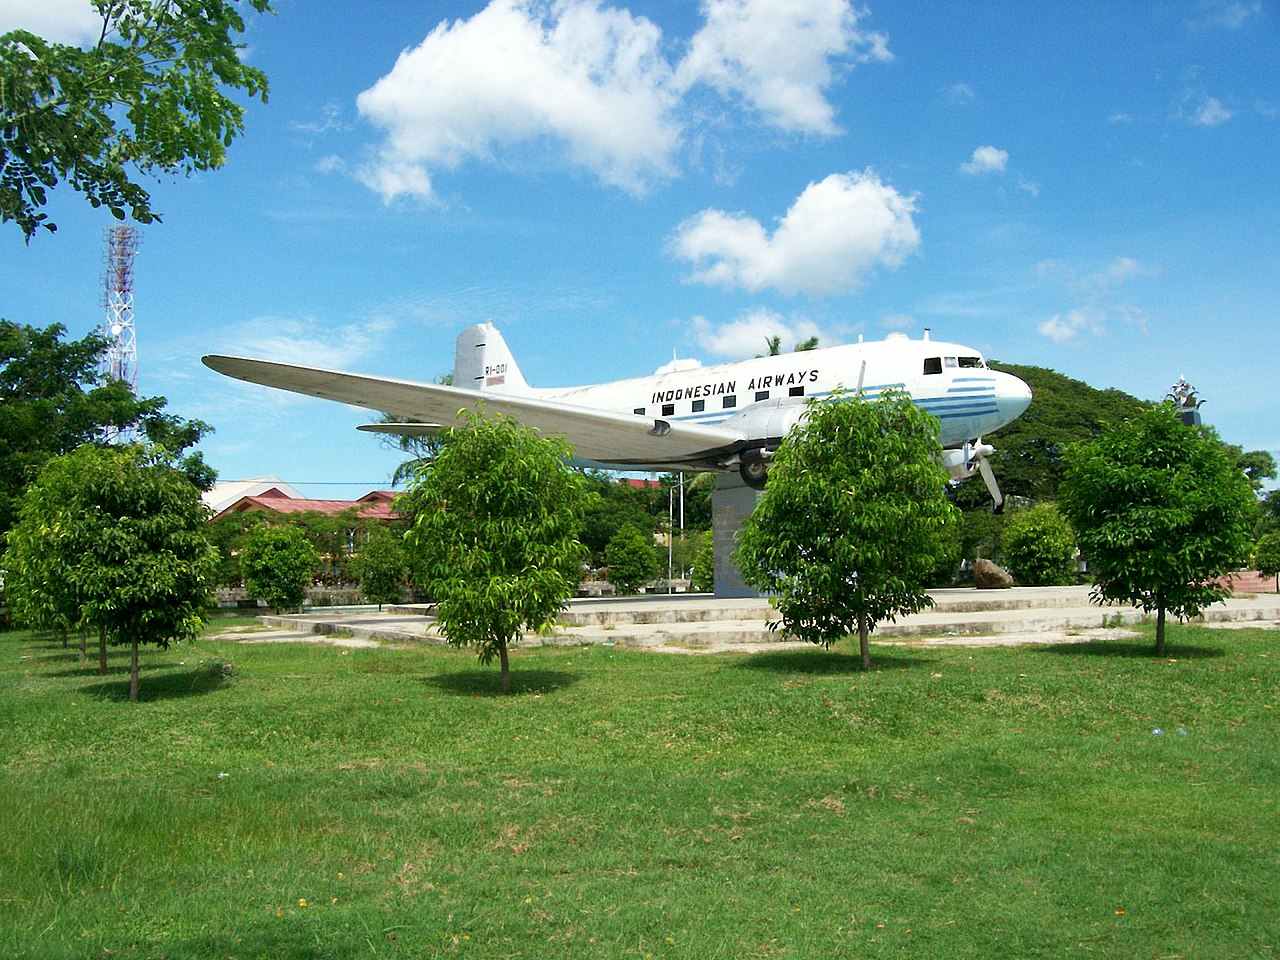 Monumen replika pesawat Dakota Seulawah 001 di lapangan Blang Padang, Banda Aceh | Wikimedia commons